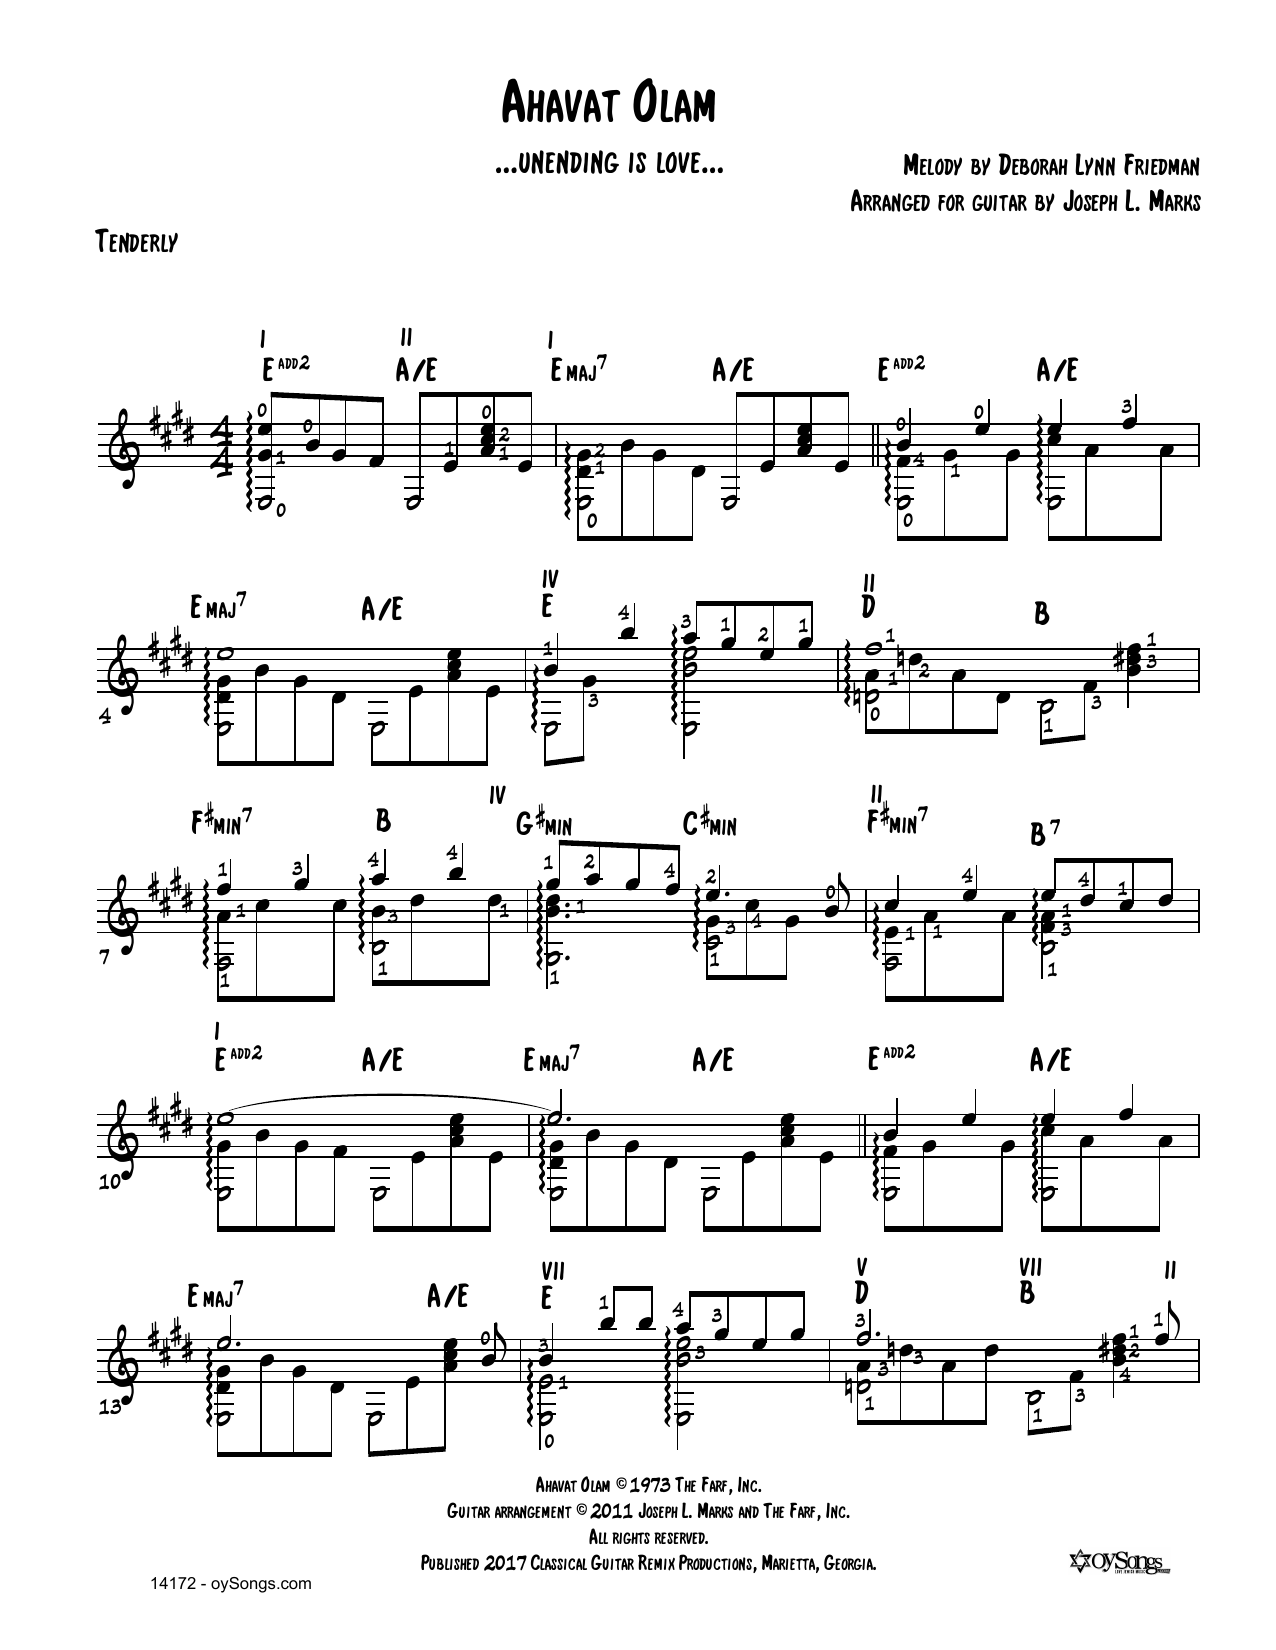 Debbie Friedman Ahavat Olam (arr. Joe Marks) Sheet Music Notes & Chords for Guitar Tab - Download or Print PDF